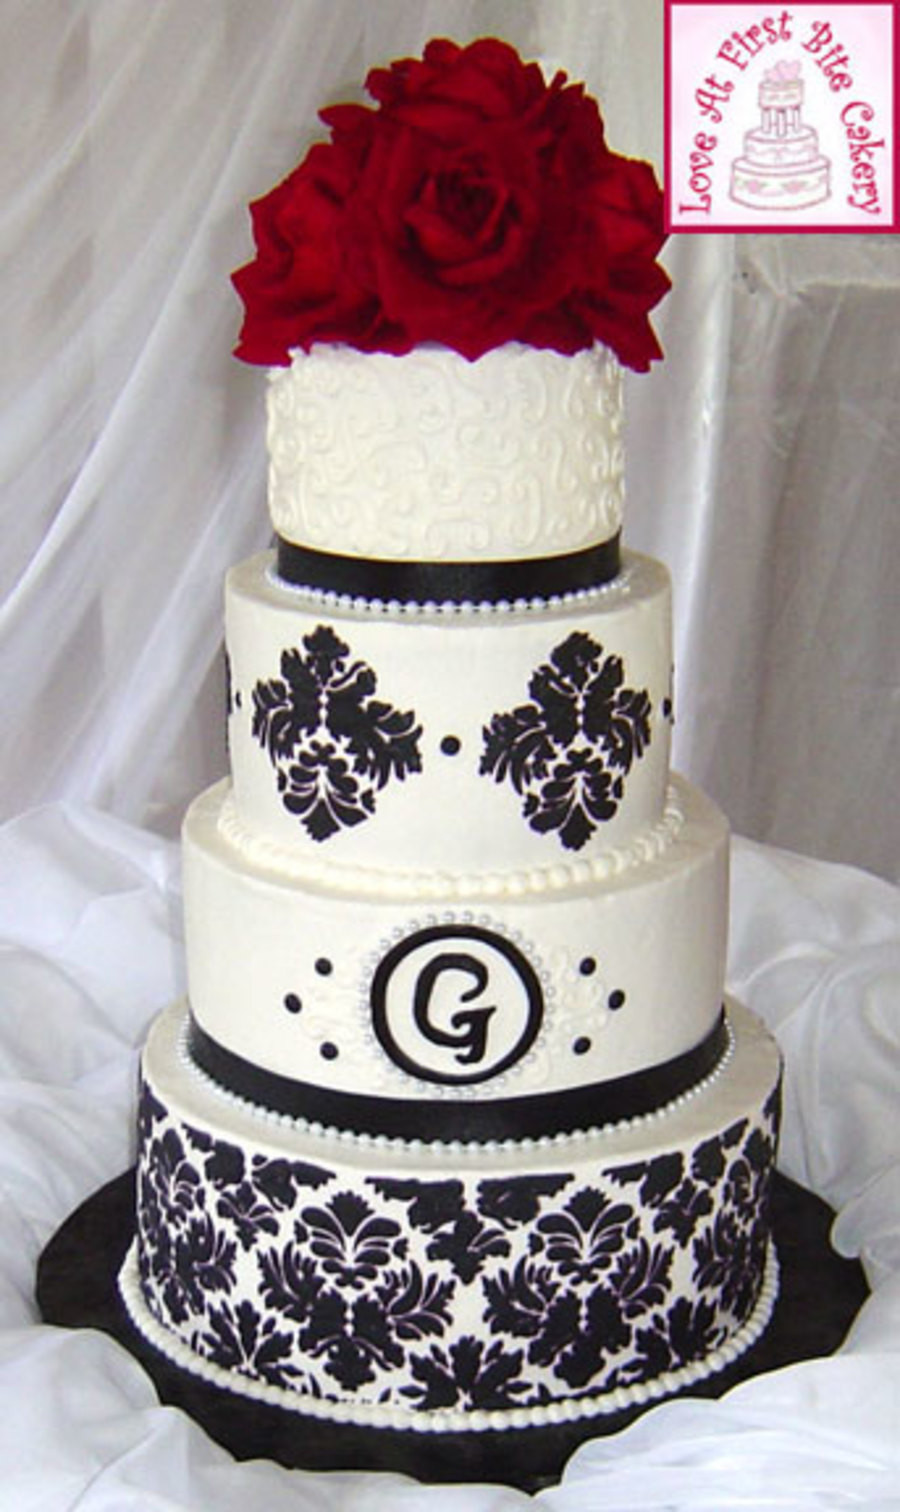 Red Black White Wedding Cakes
 Stenciled Black White Red Wedding Cake CakeCentral